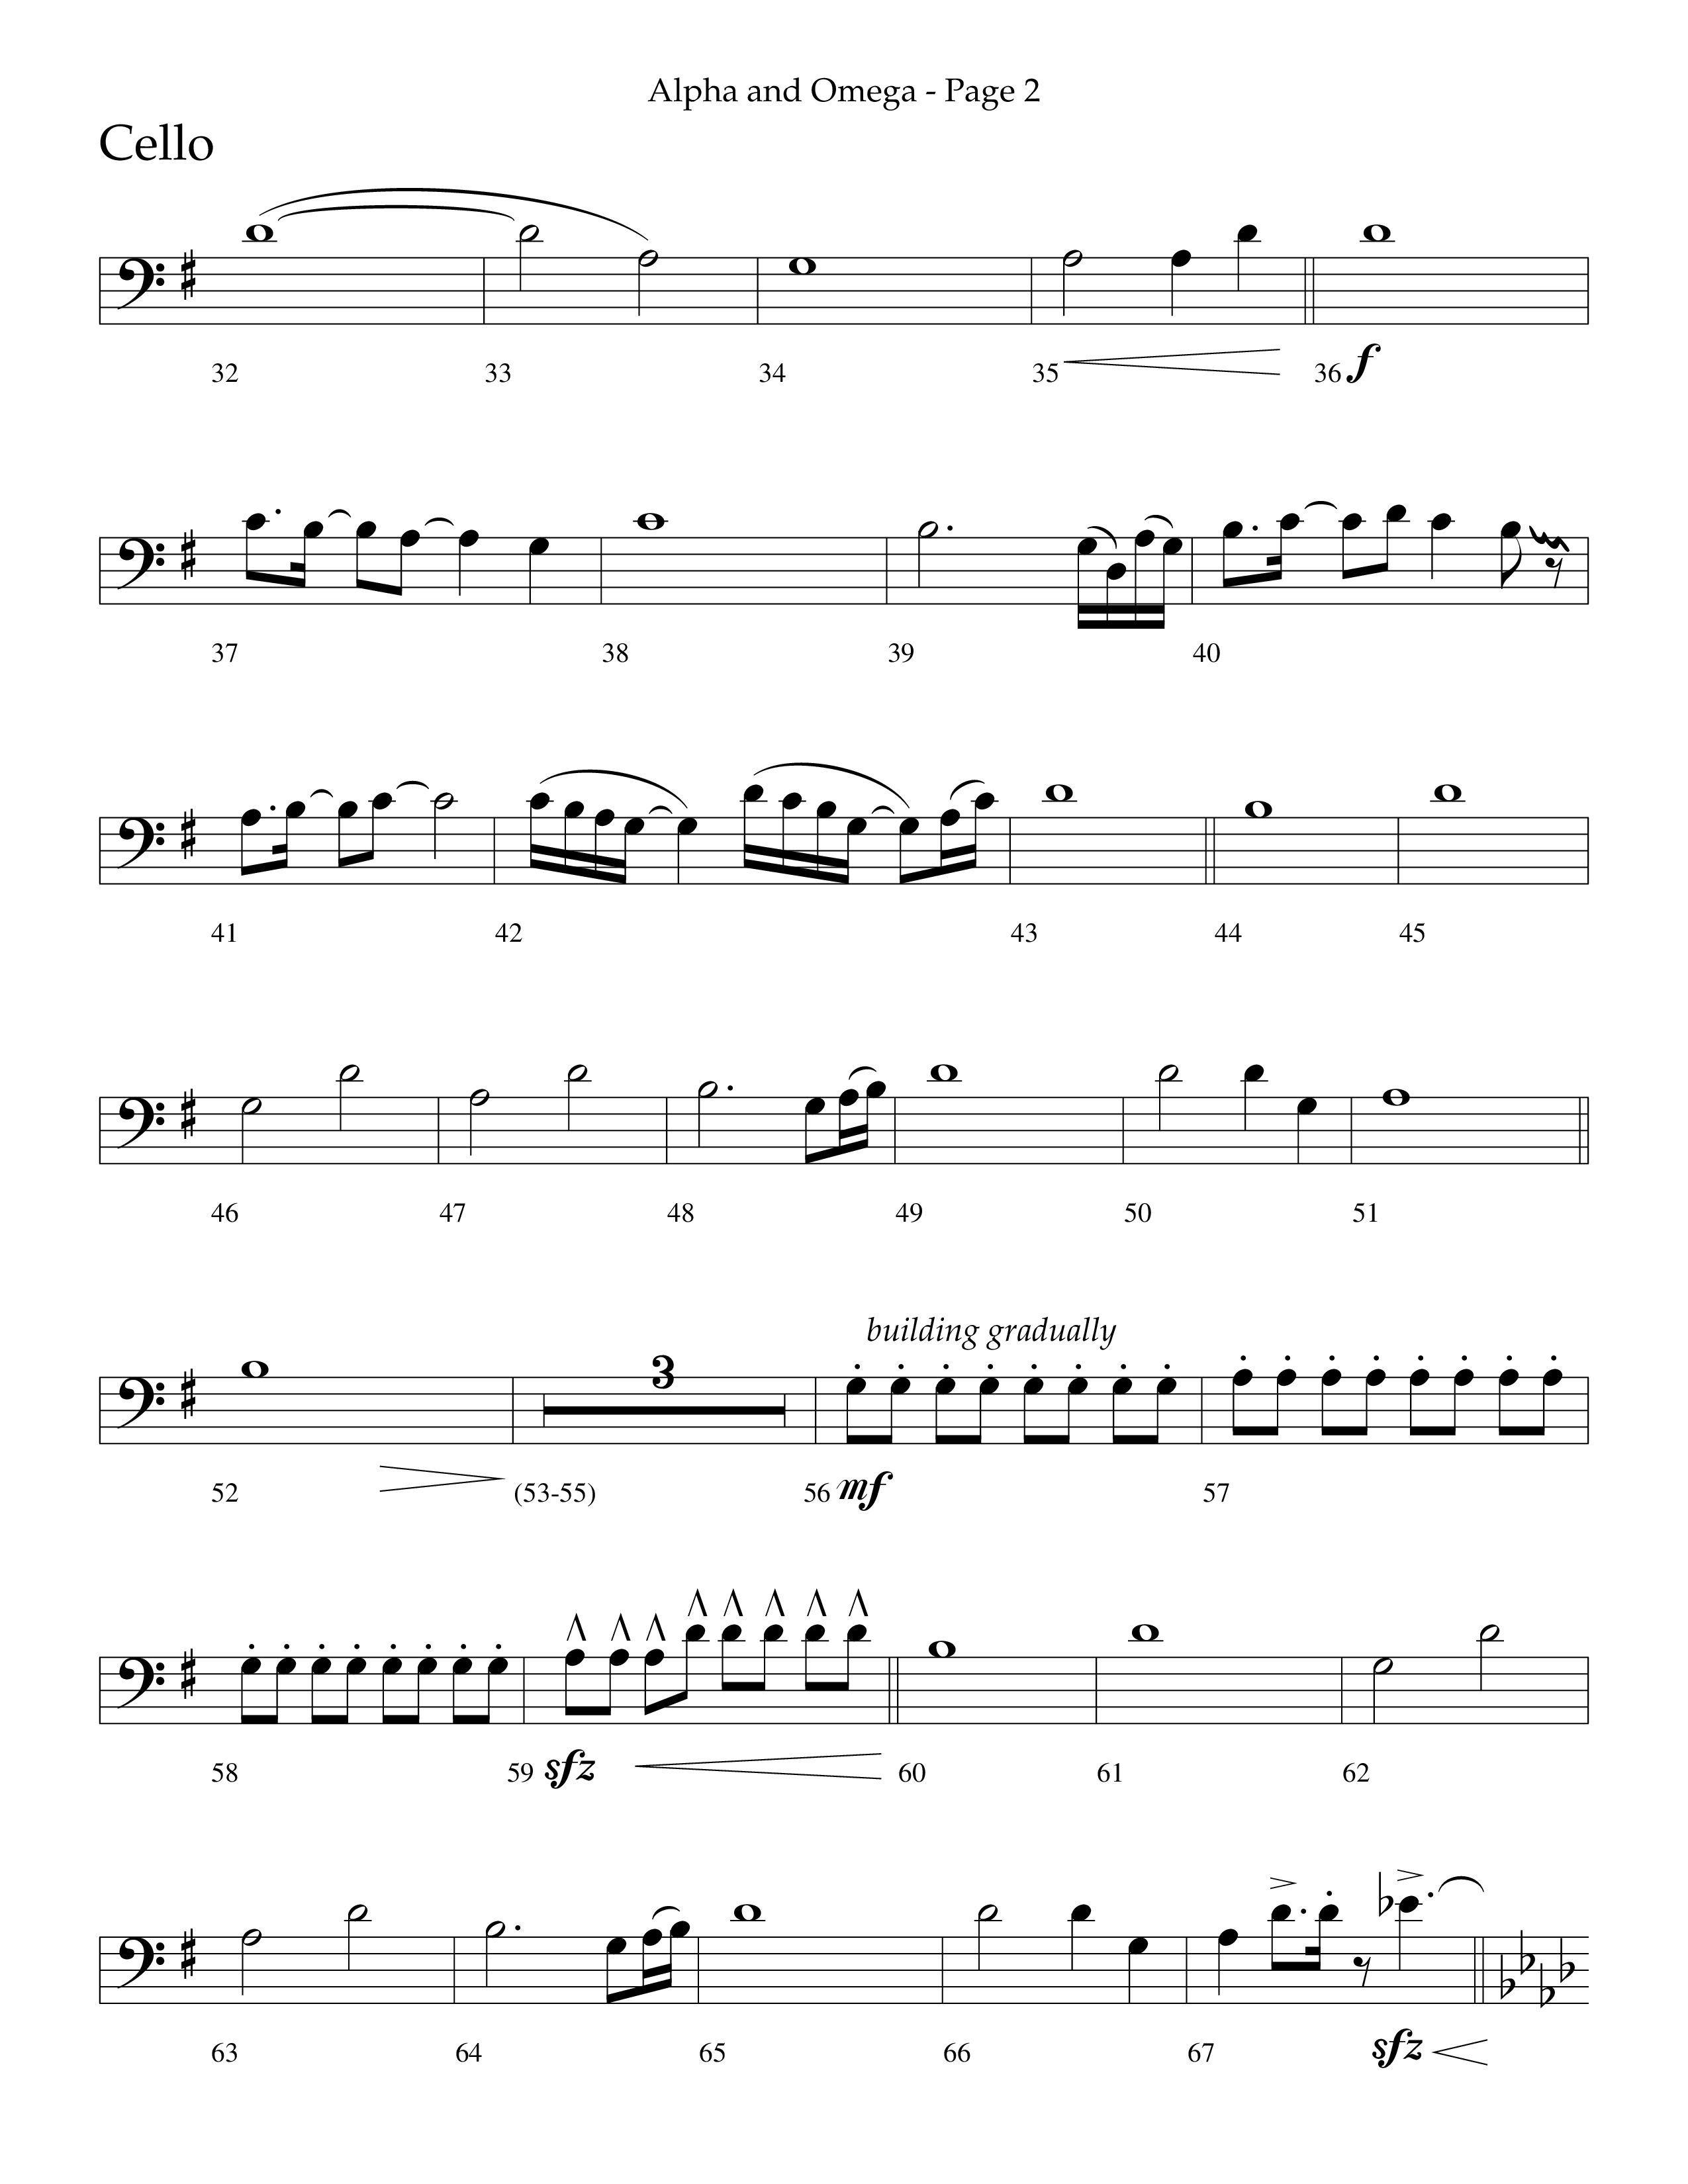 Alpha And Omega (Choral Anthem SATB) Cello (Lifeway Choral / Arr. Cliff Duren)